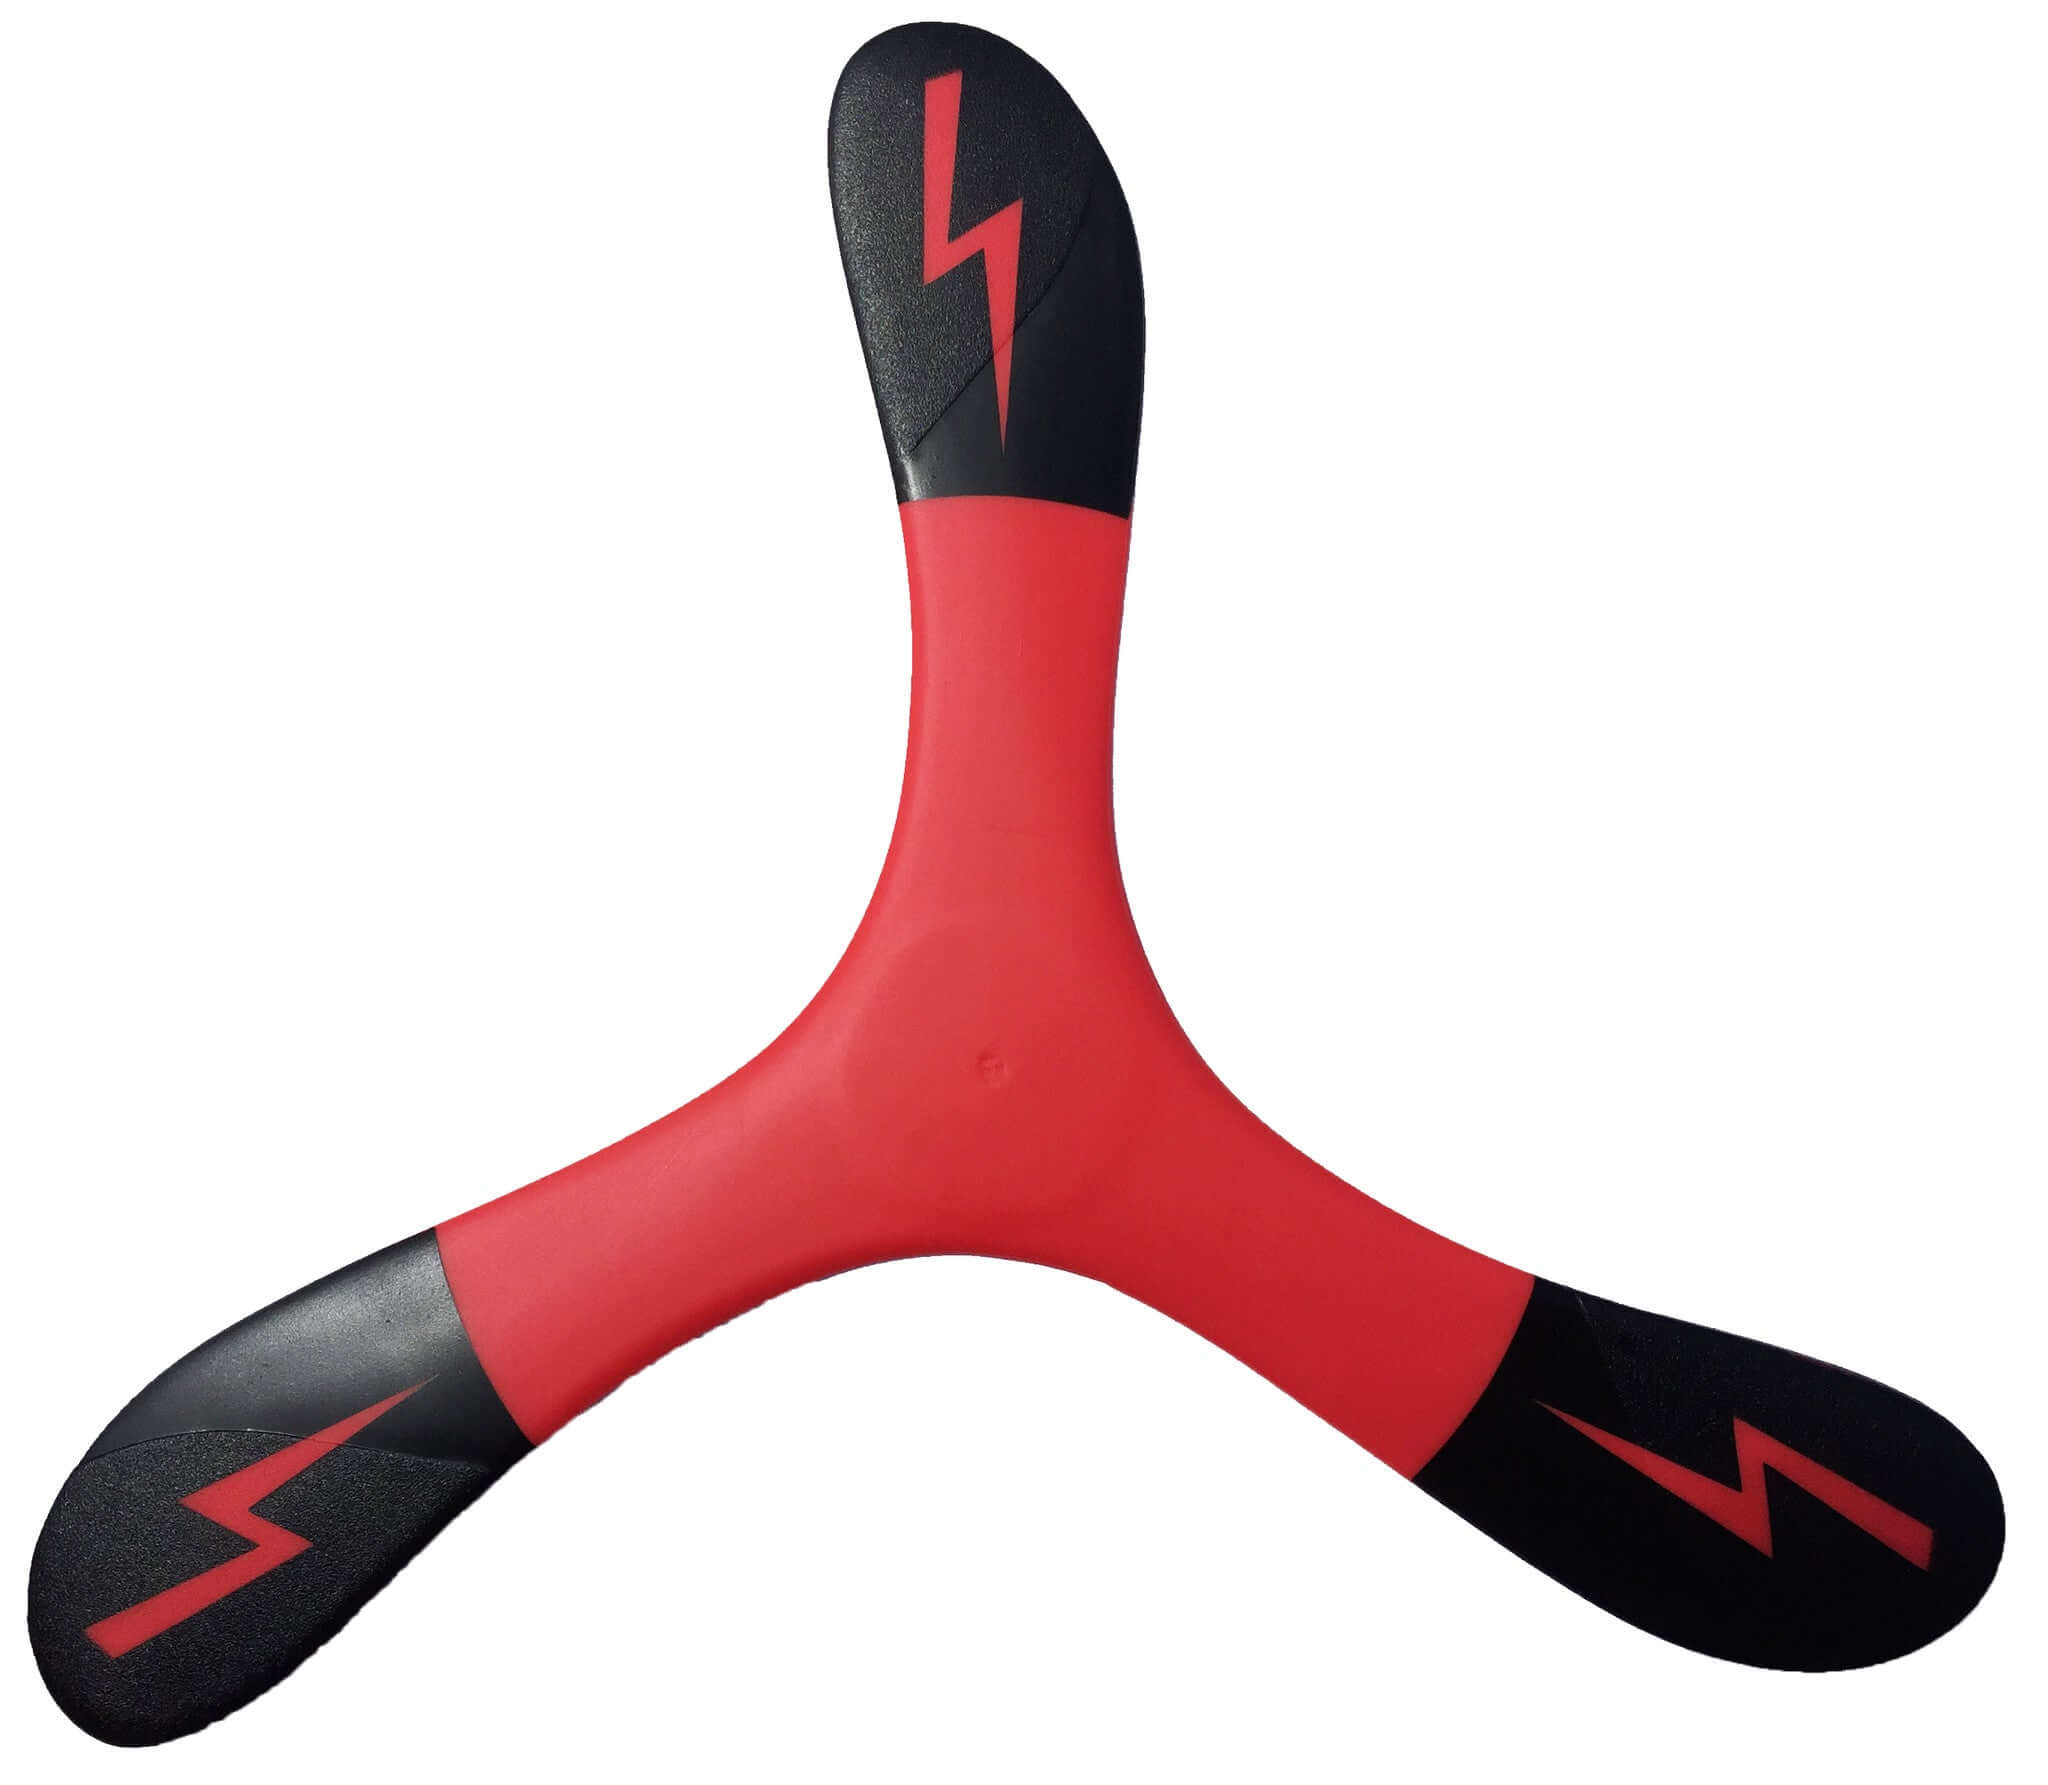 Red Bolt Boomerang RH - Fast Catch with Attitude! - boomerangs-com